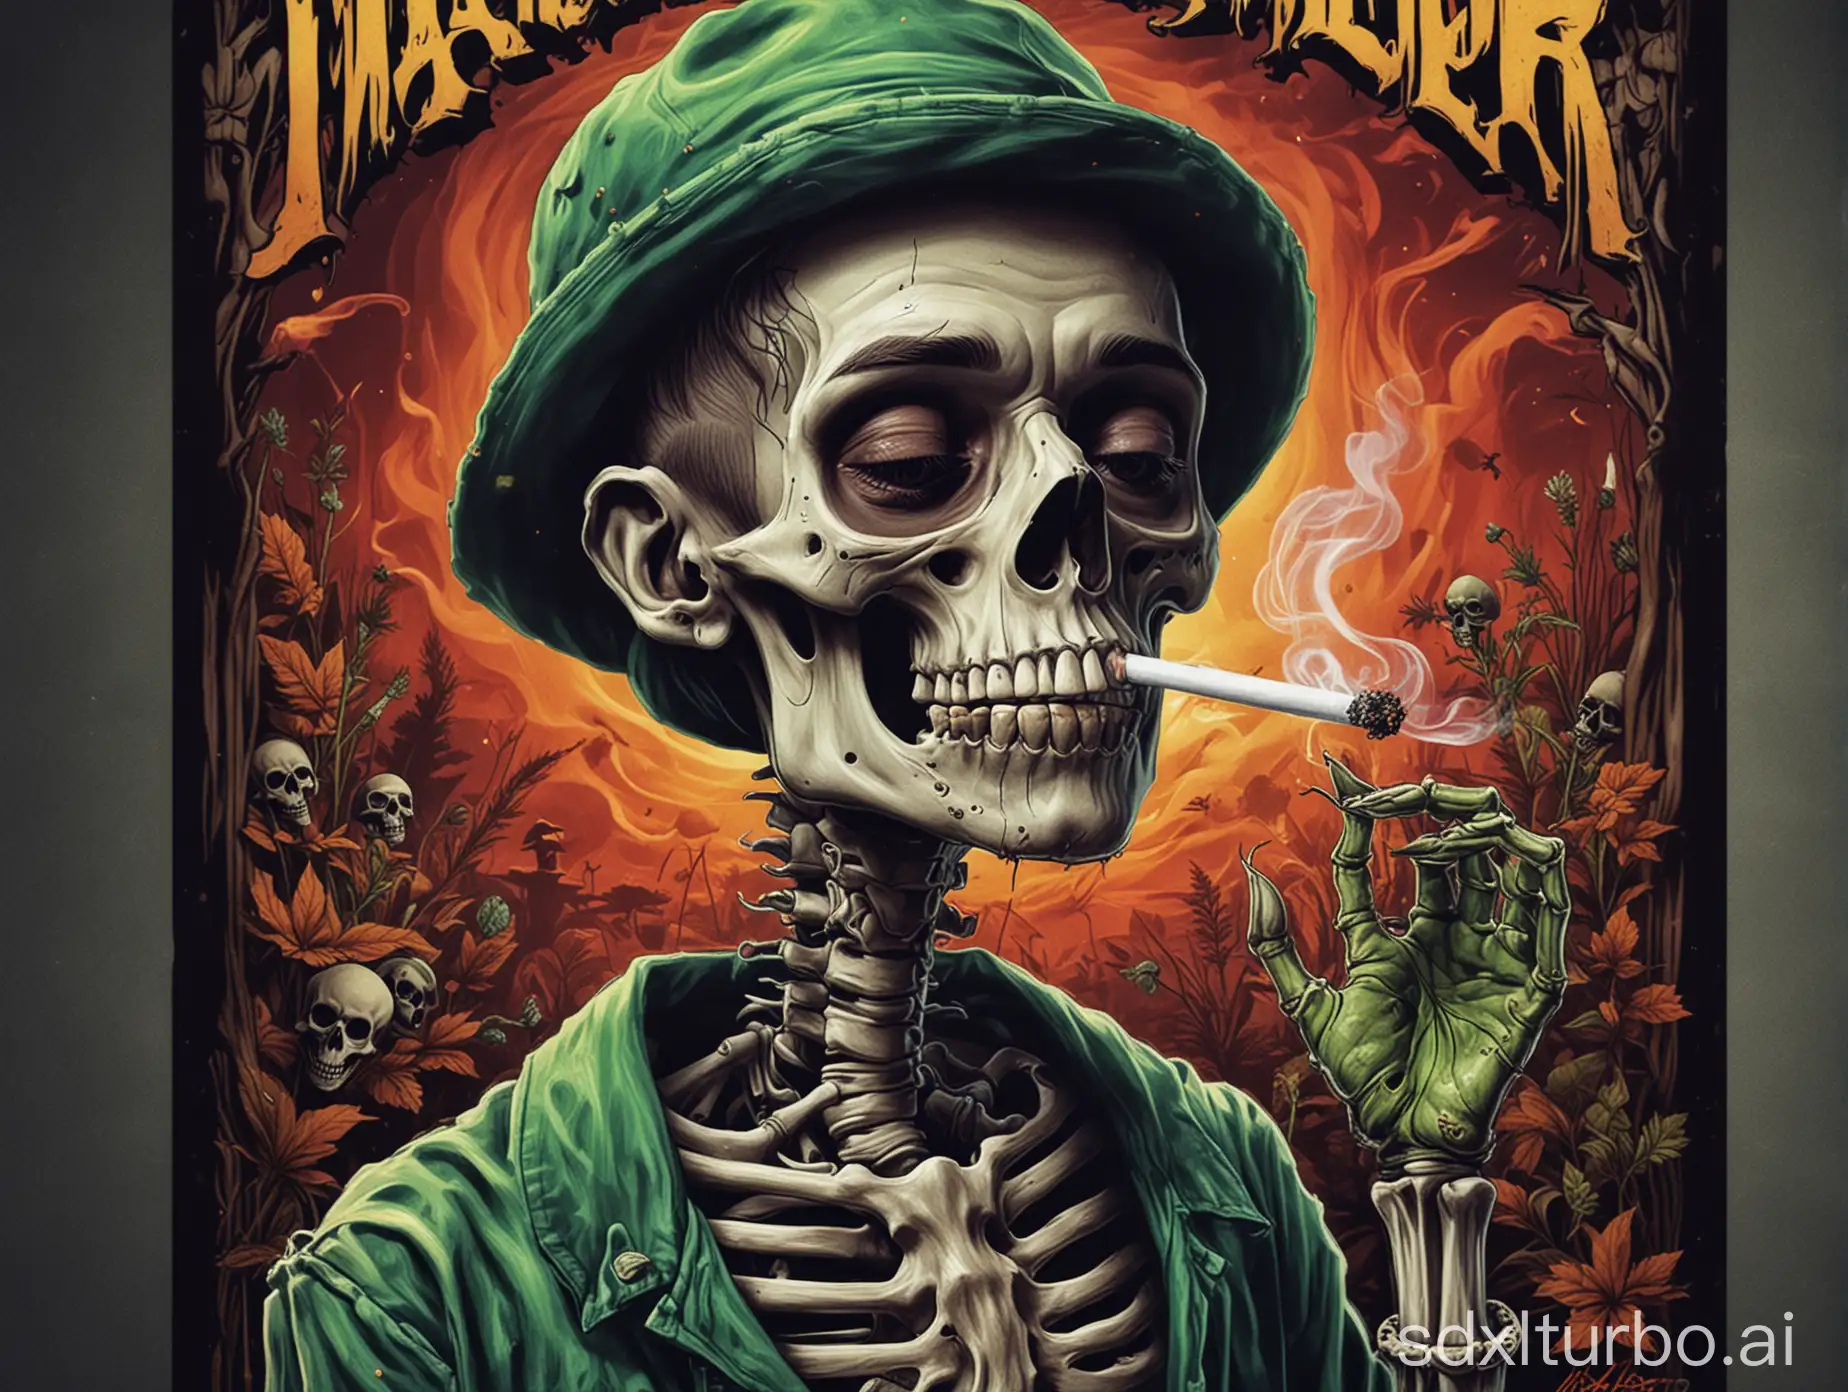 Skeleton-Smoking-Weed-Gig-Poster-Art-by-Munk-One-and-Jimbo-Phillips